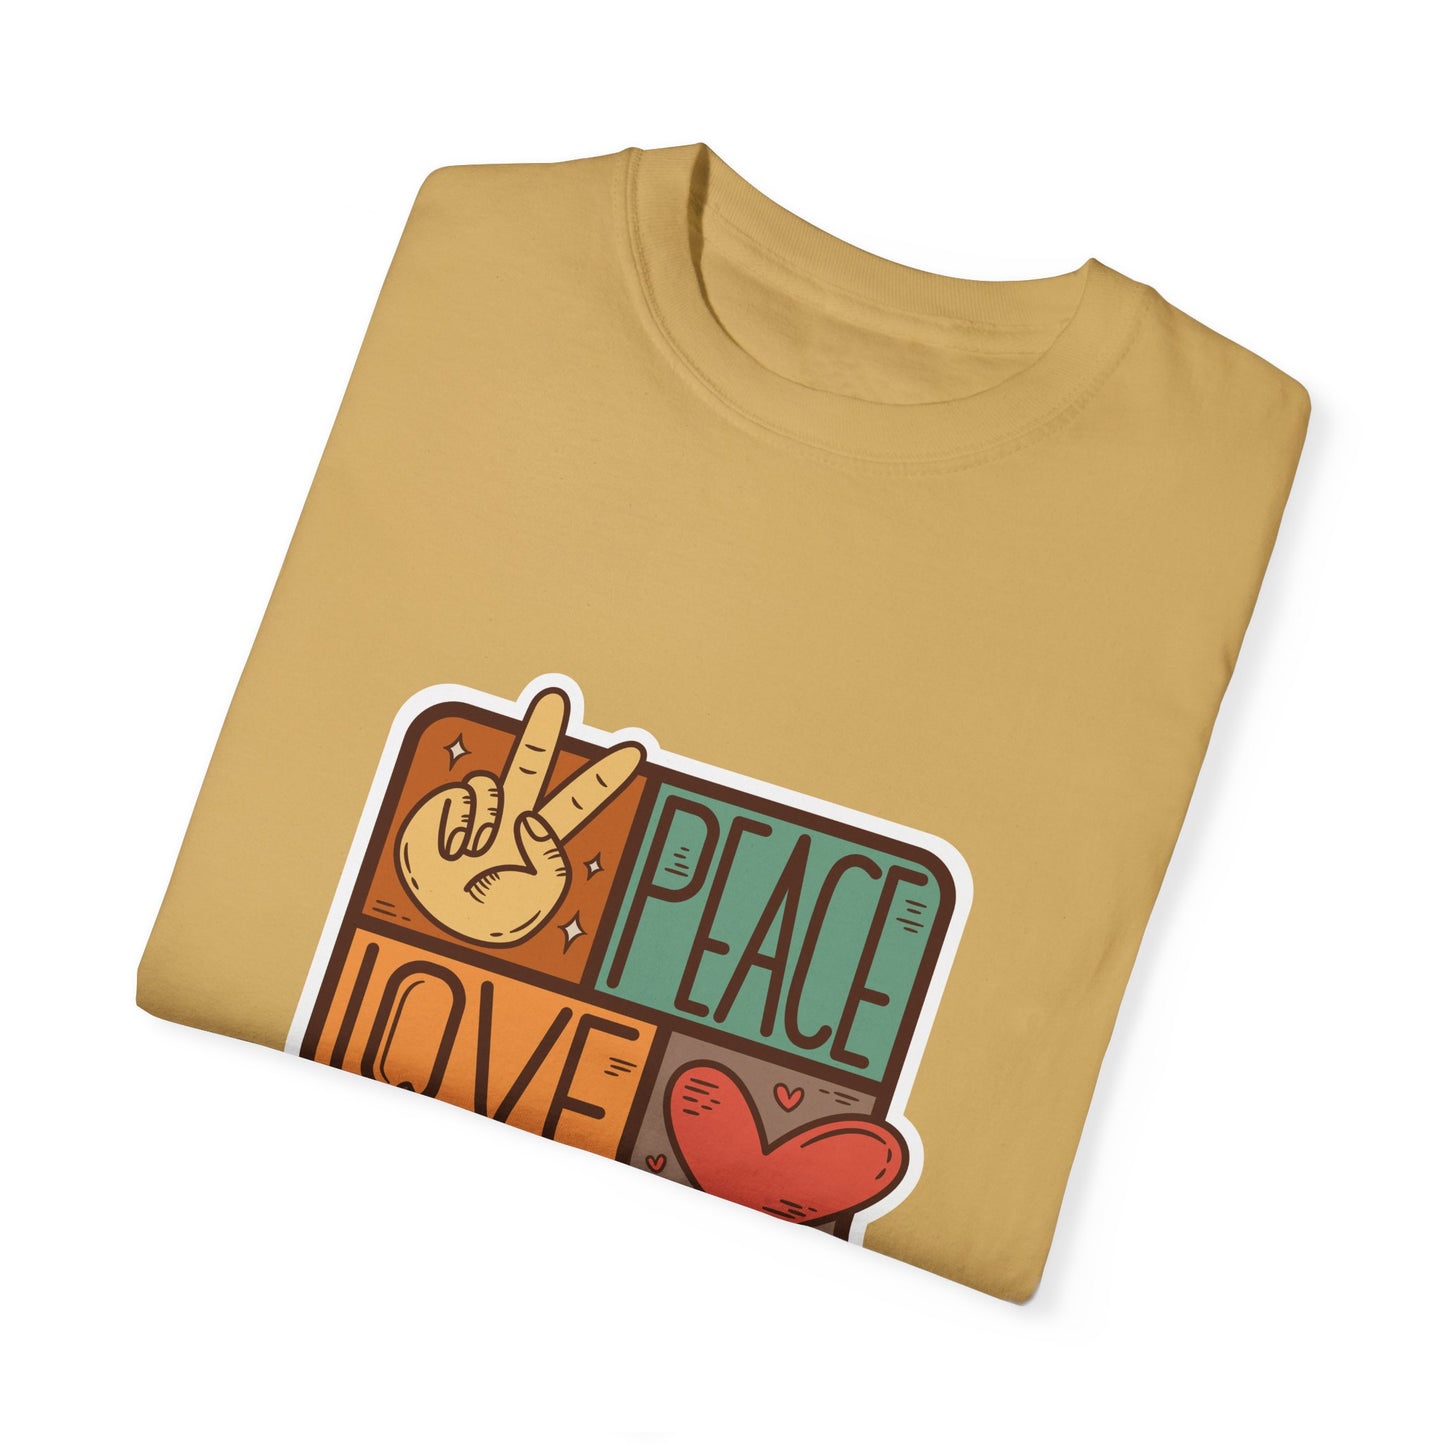 Peace, Love, Cherries Unisex Garment-Dyed T-shirt